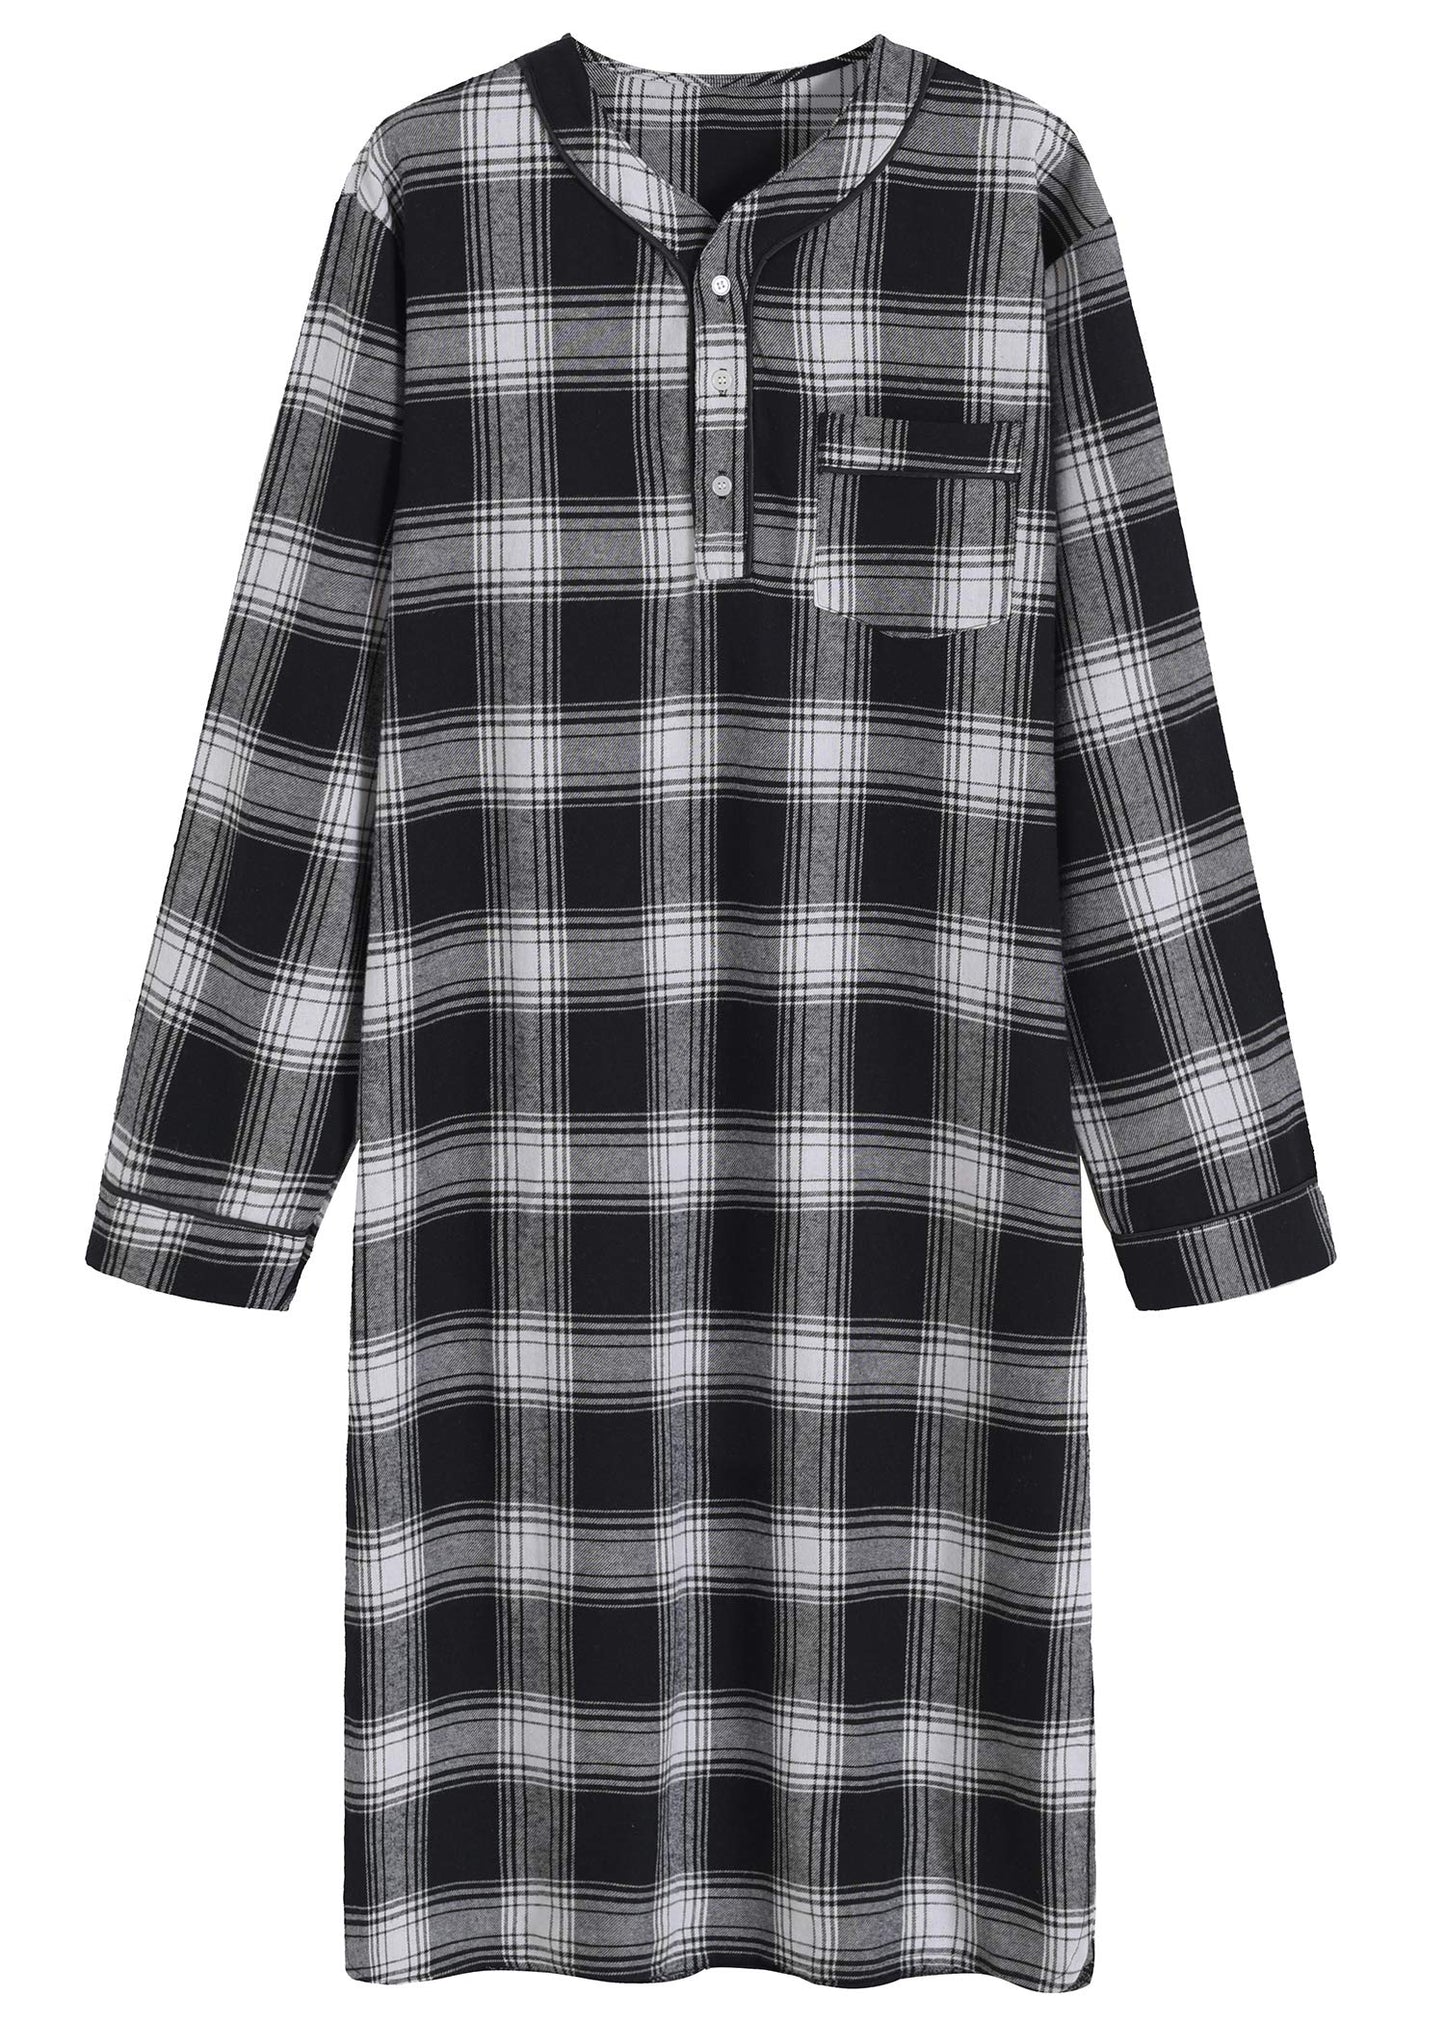 Men's Cotton Flannel Nightshirt Sleep Shirt - Latuza